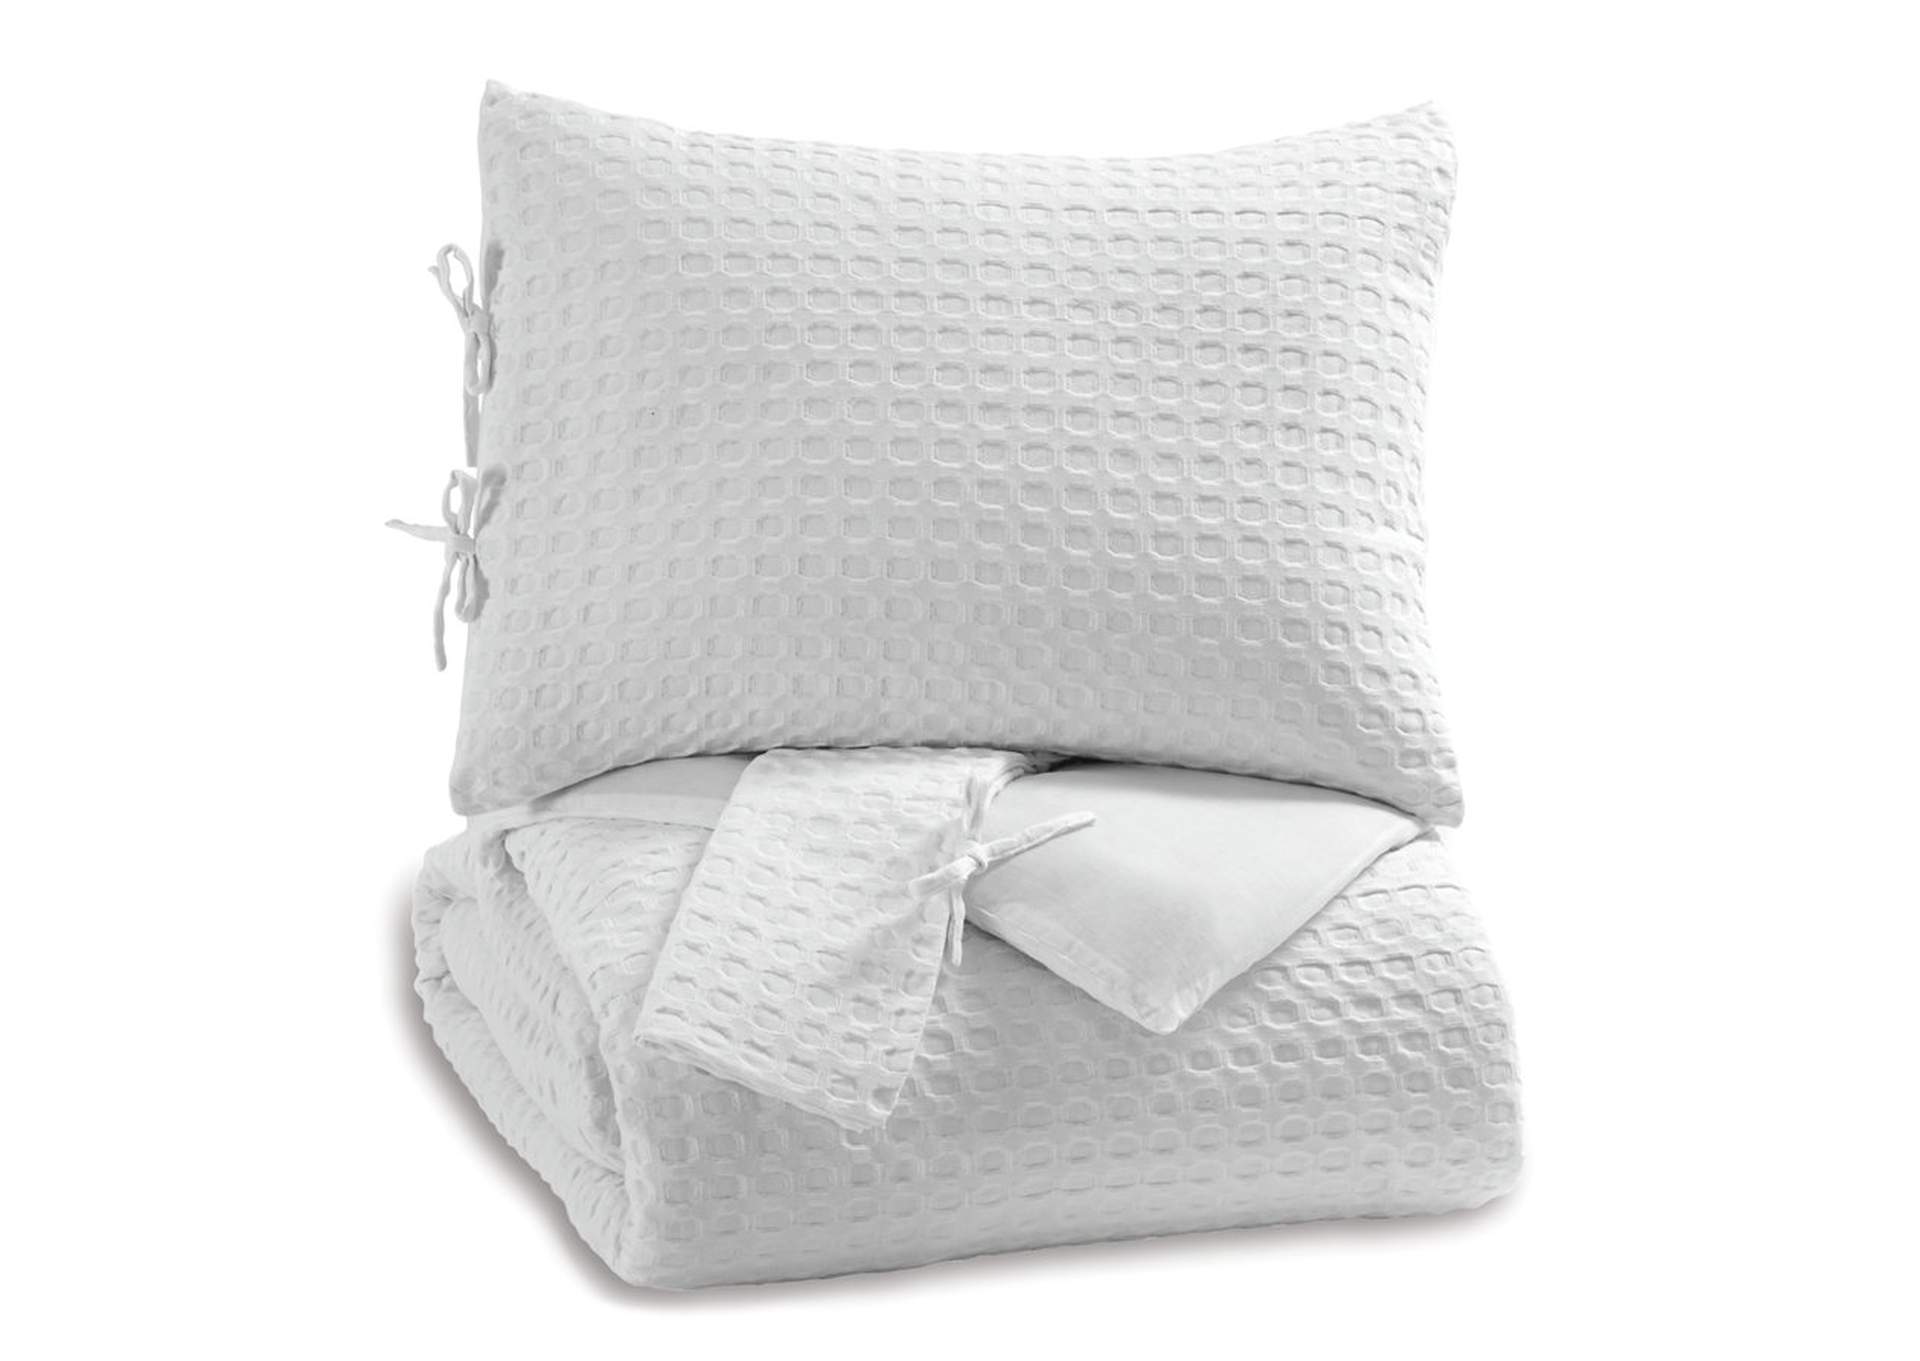 Maurilio 3-Piece Queen Comforter Set,Direct To Consumer Express